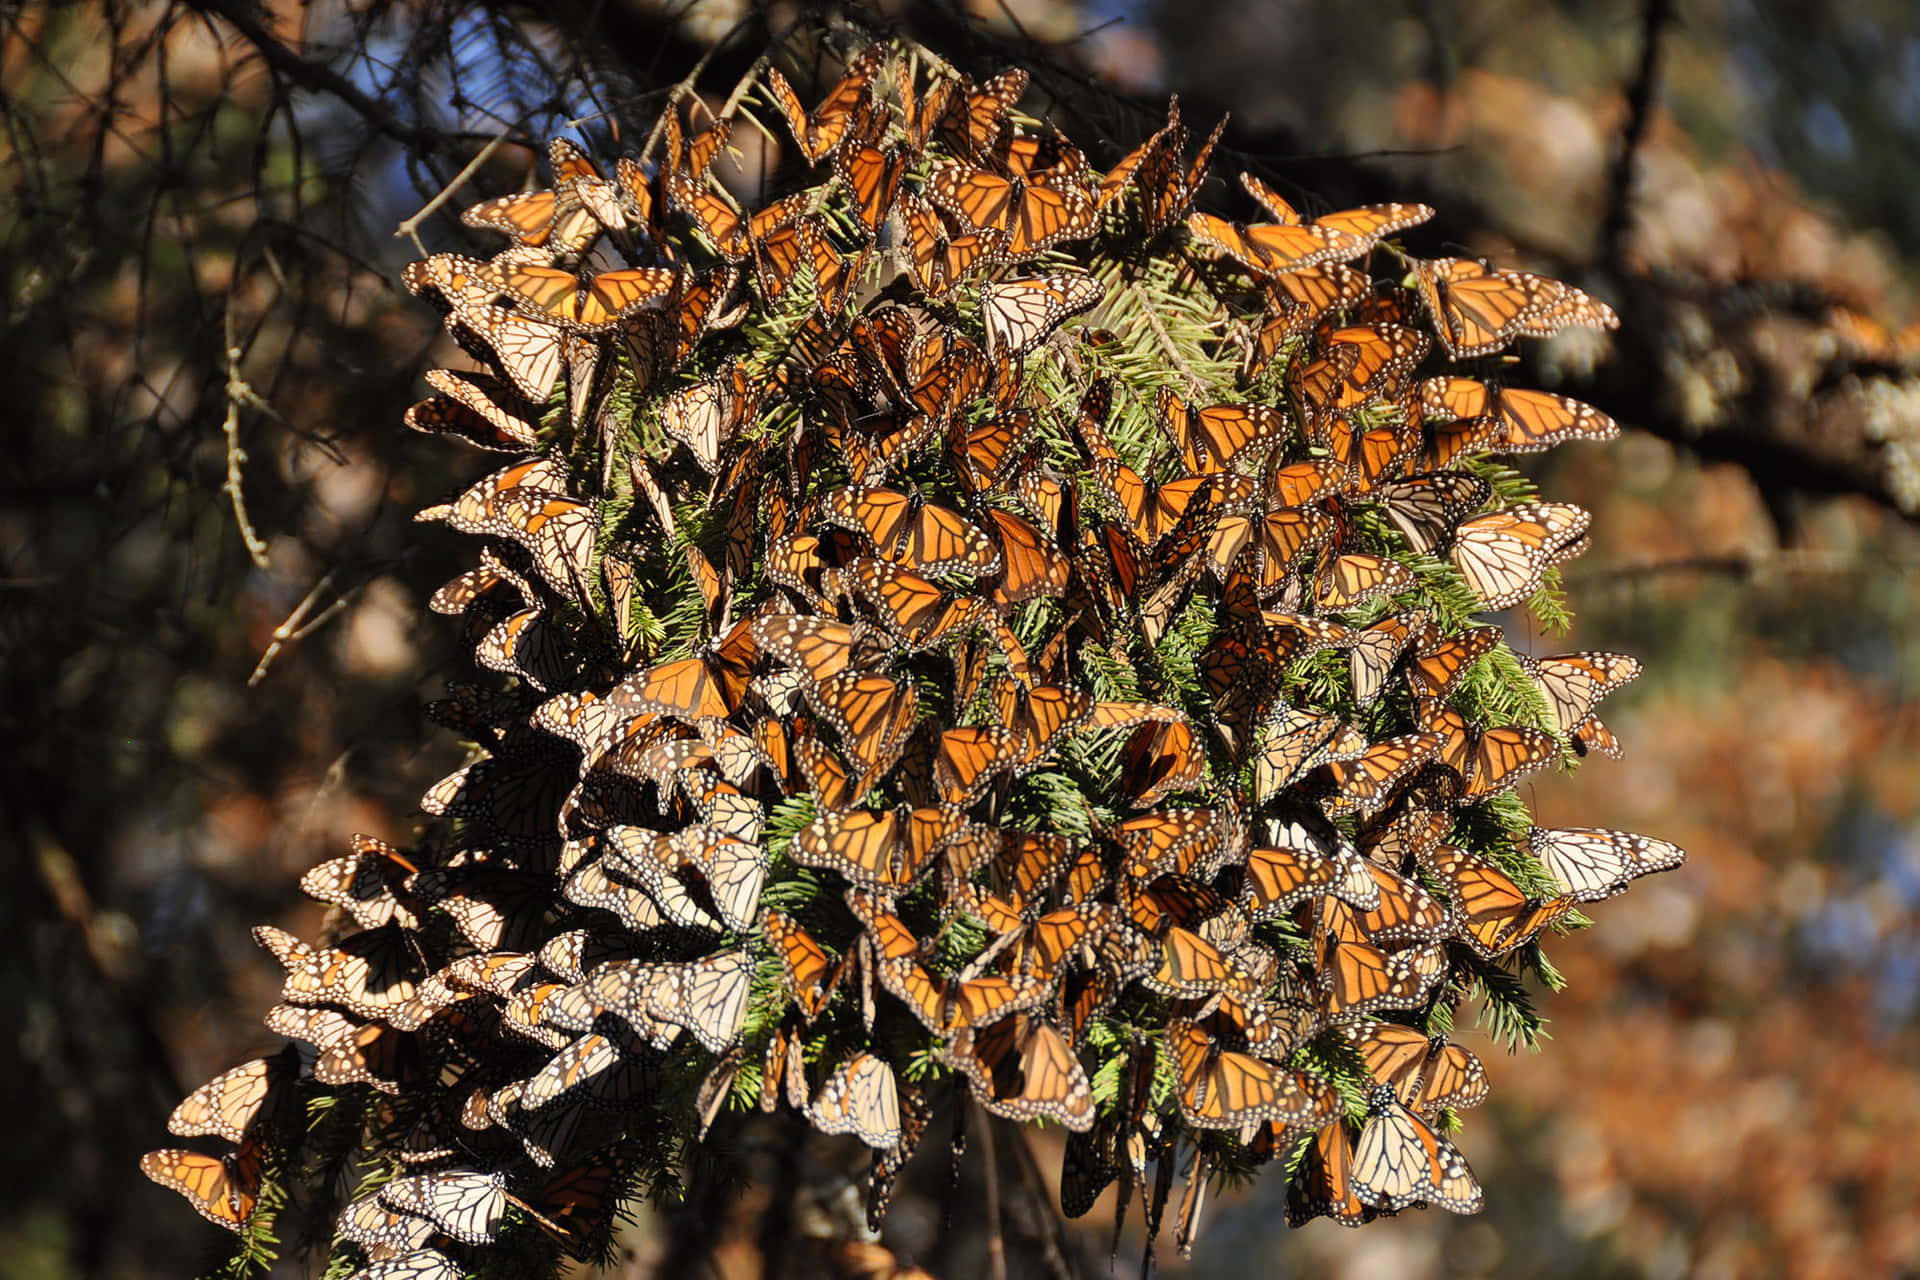 An awe-inspiring sight - the butterfly migration. Wallpaper